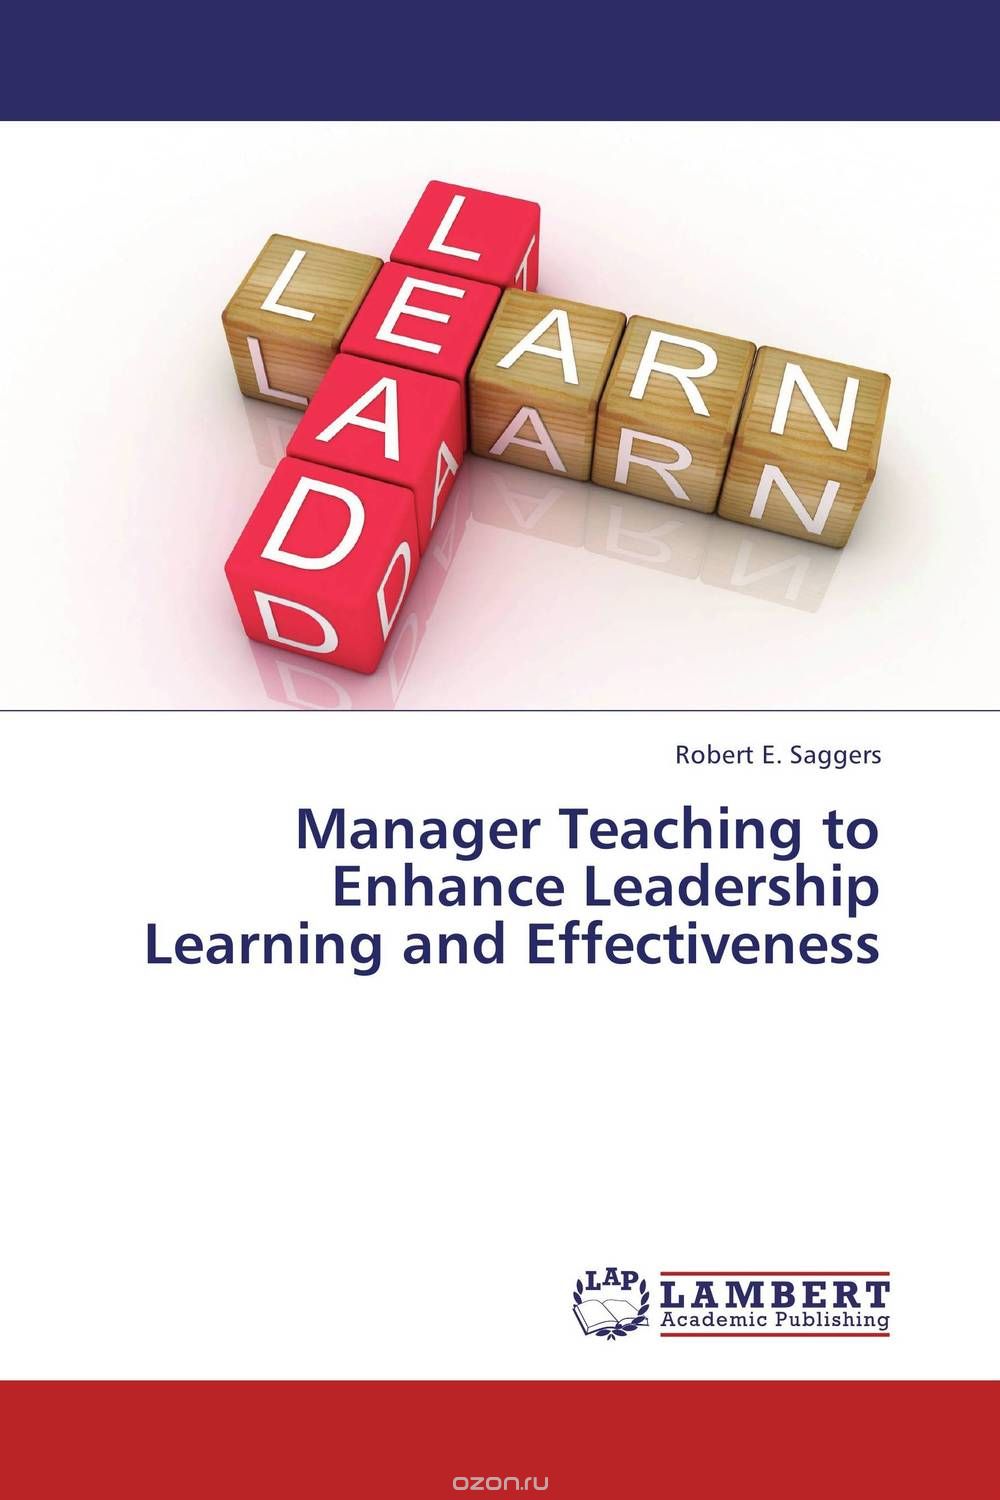 Скачать книгу "Manager Teaching to Enhance Leadership Learning and Effectiveness"